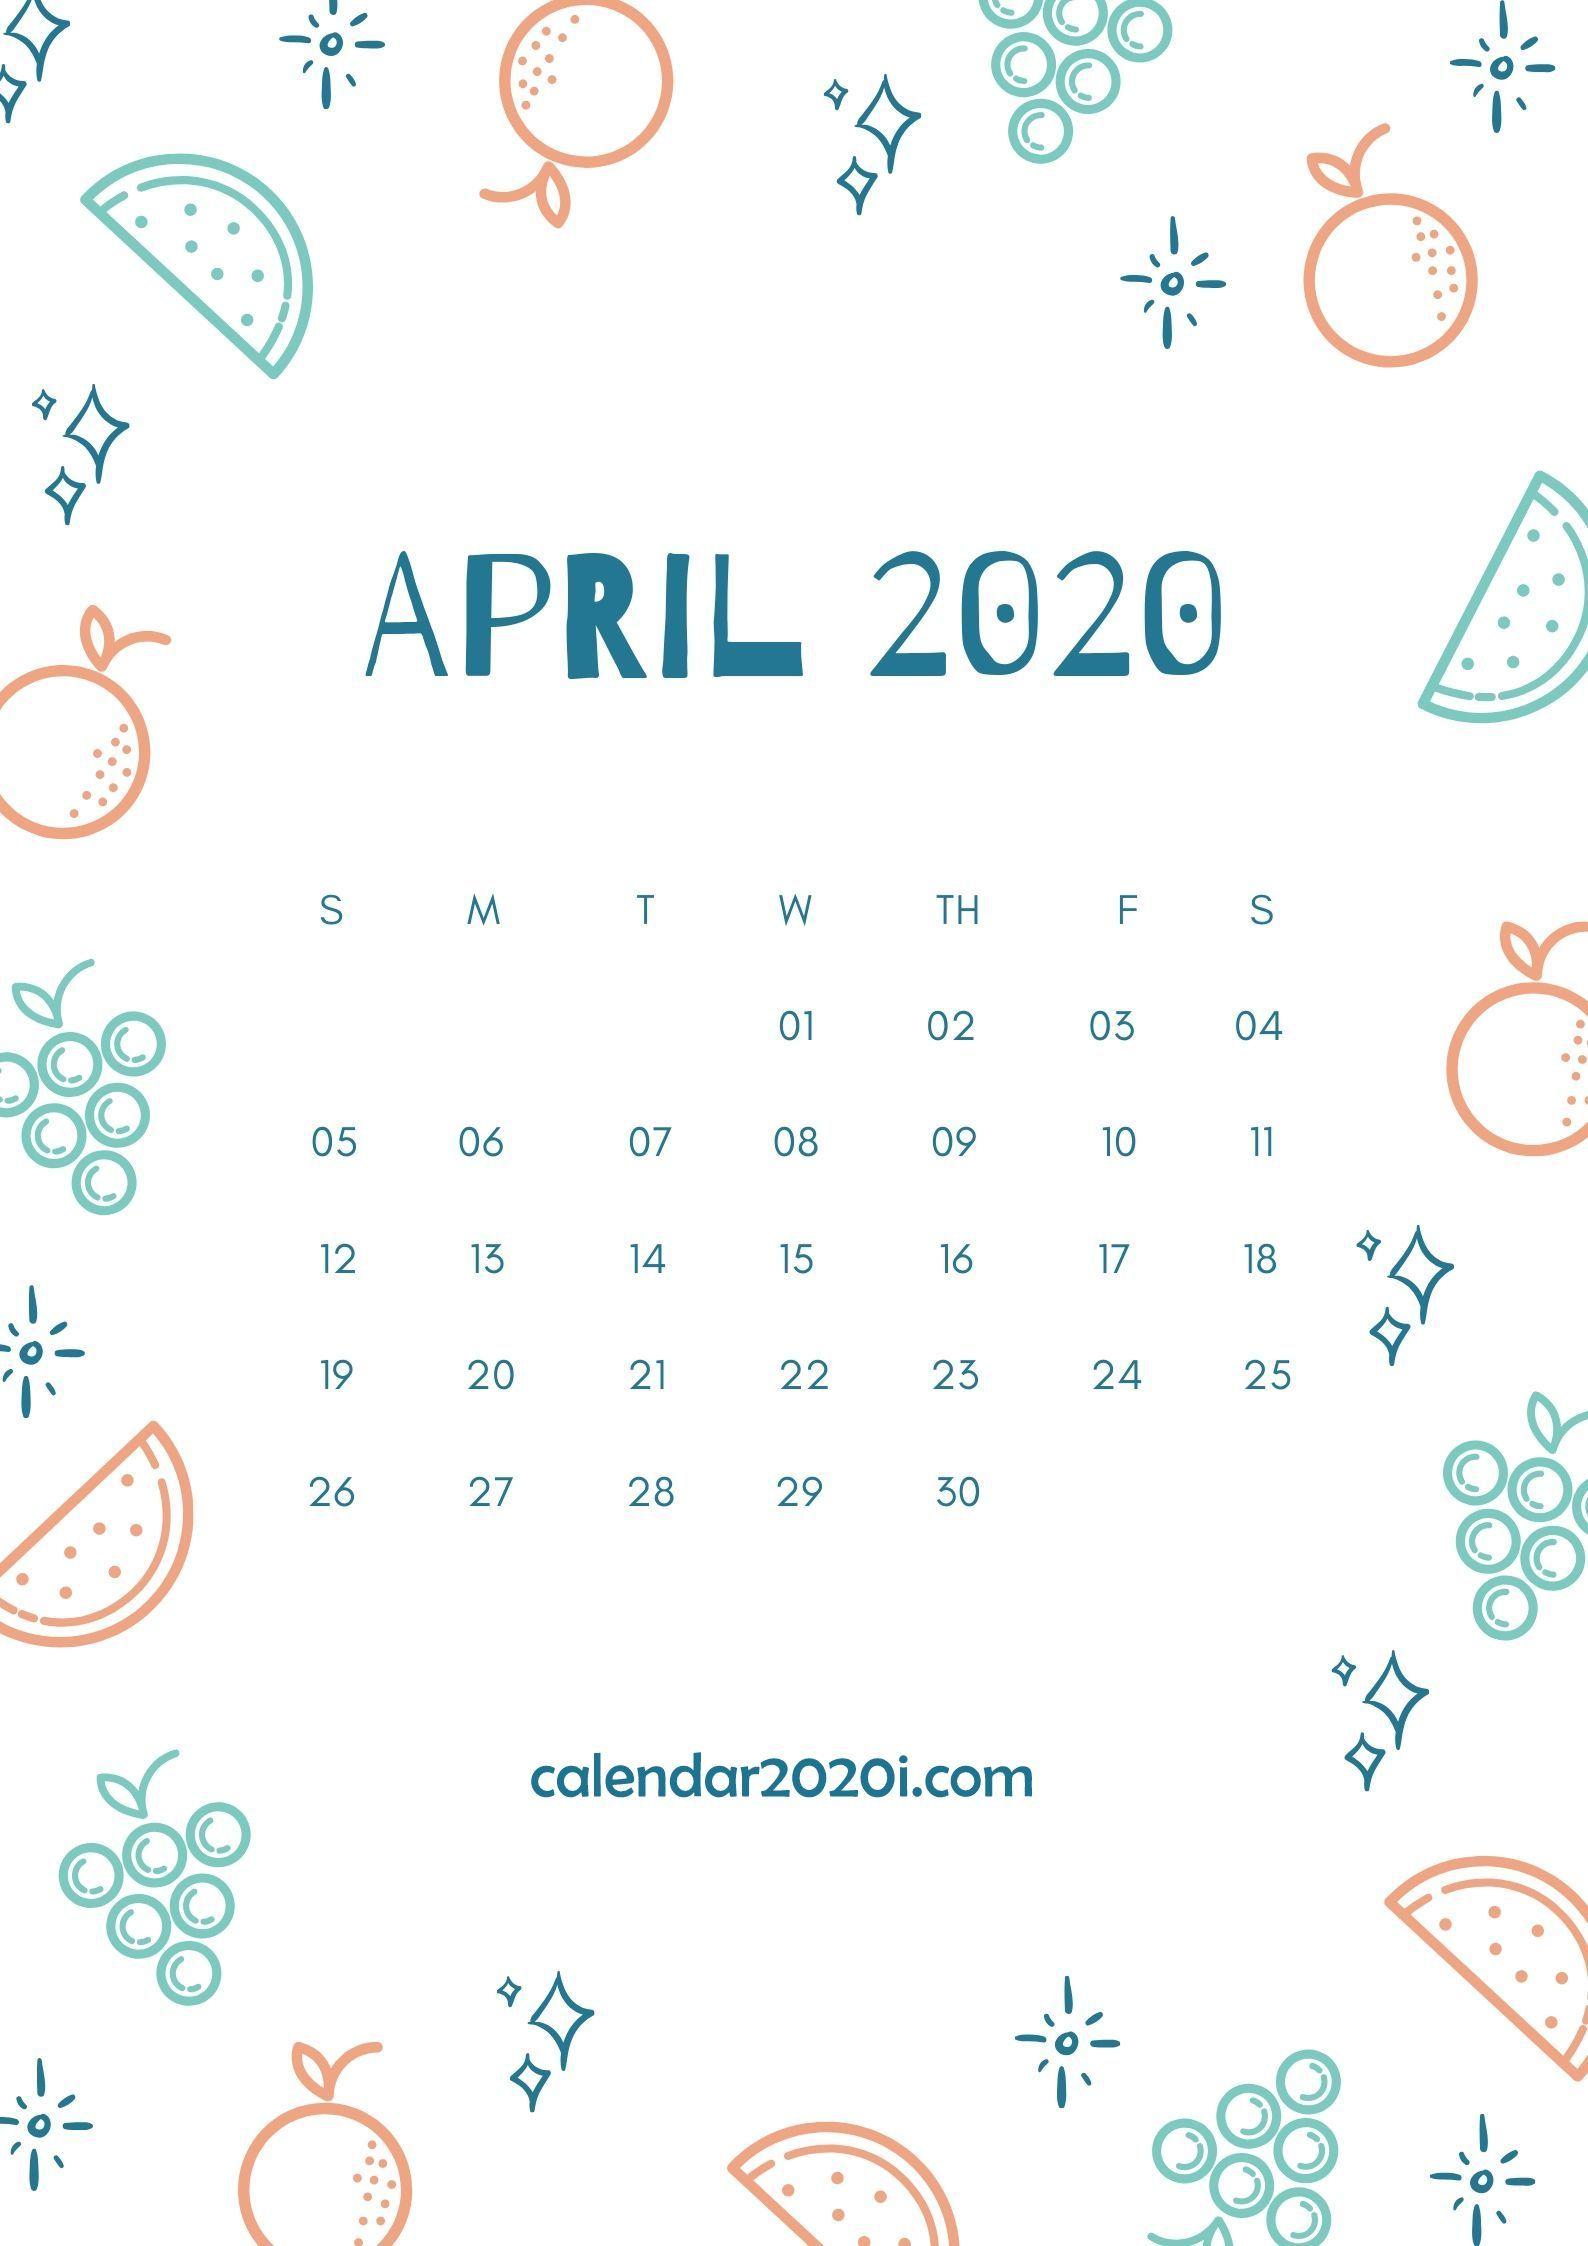 April 2021 calendar wallpapers  30 FREE  cute design options